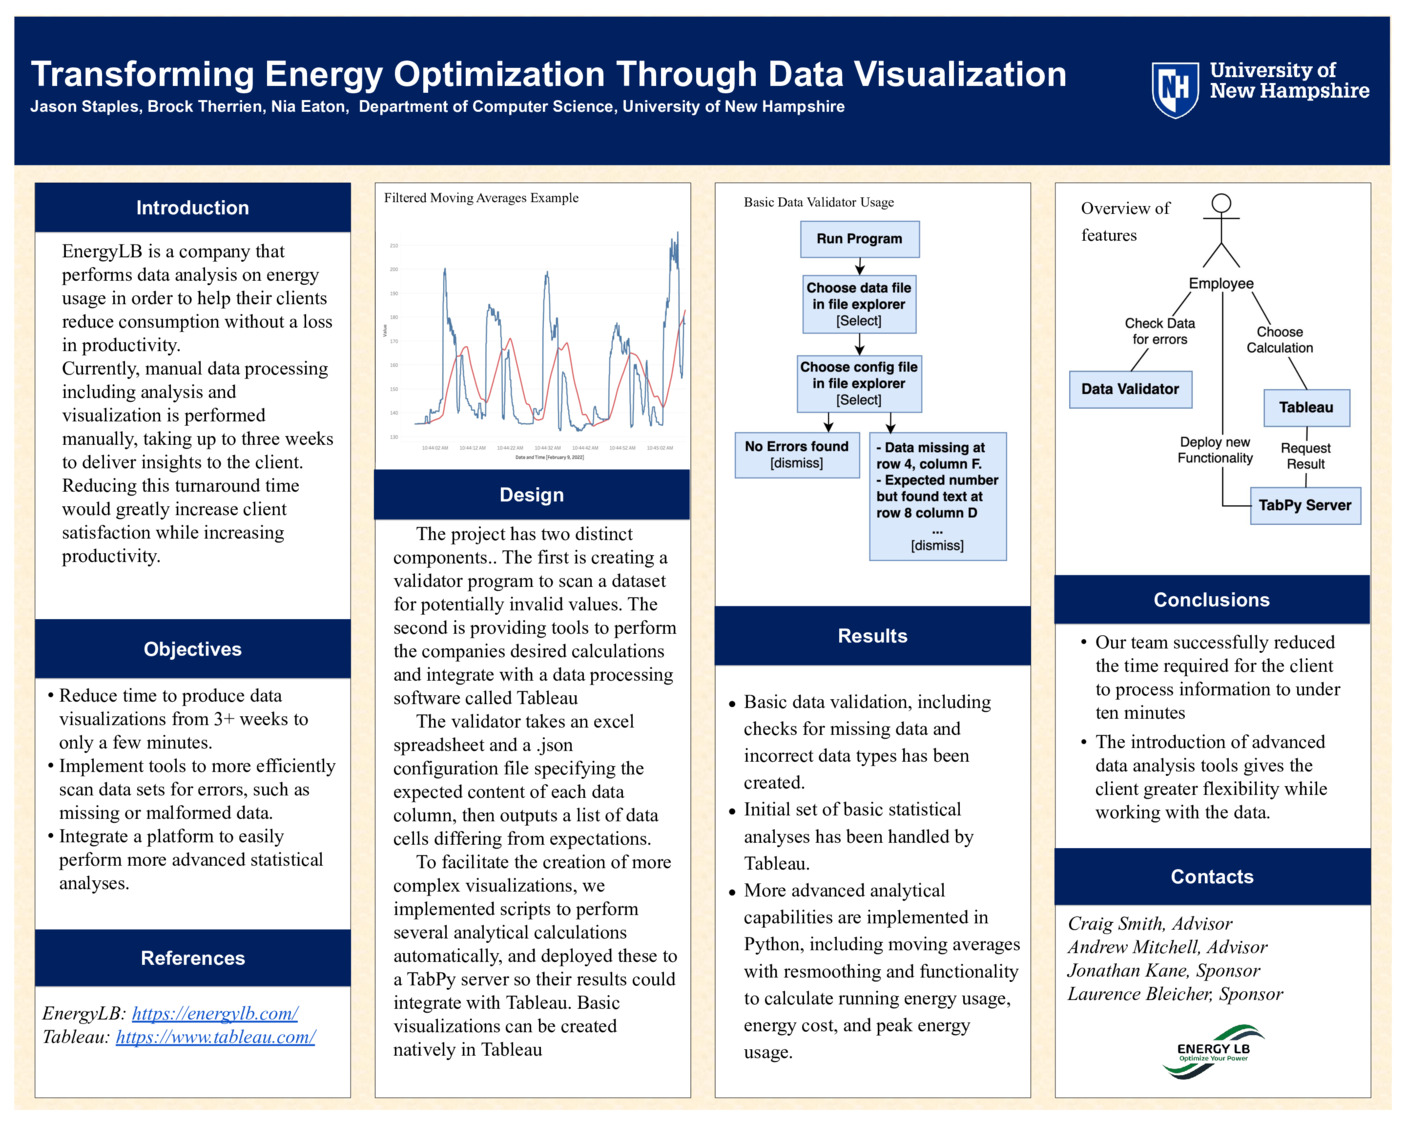 Transforming Energy Optimization Through Data Visualization by dge1005